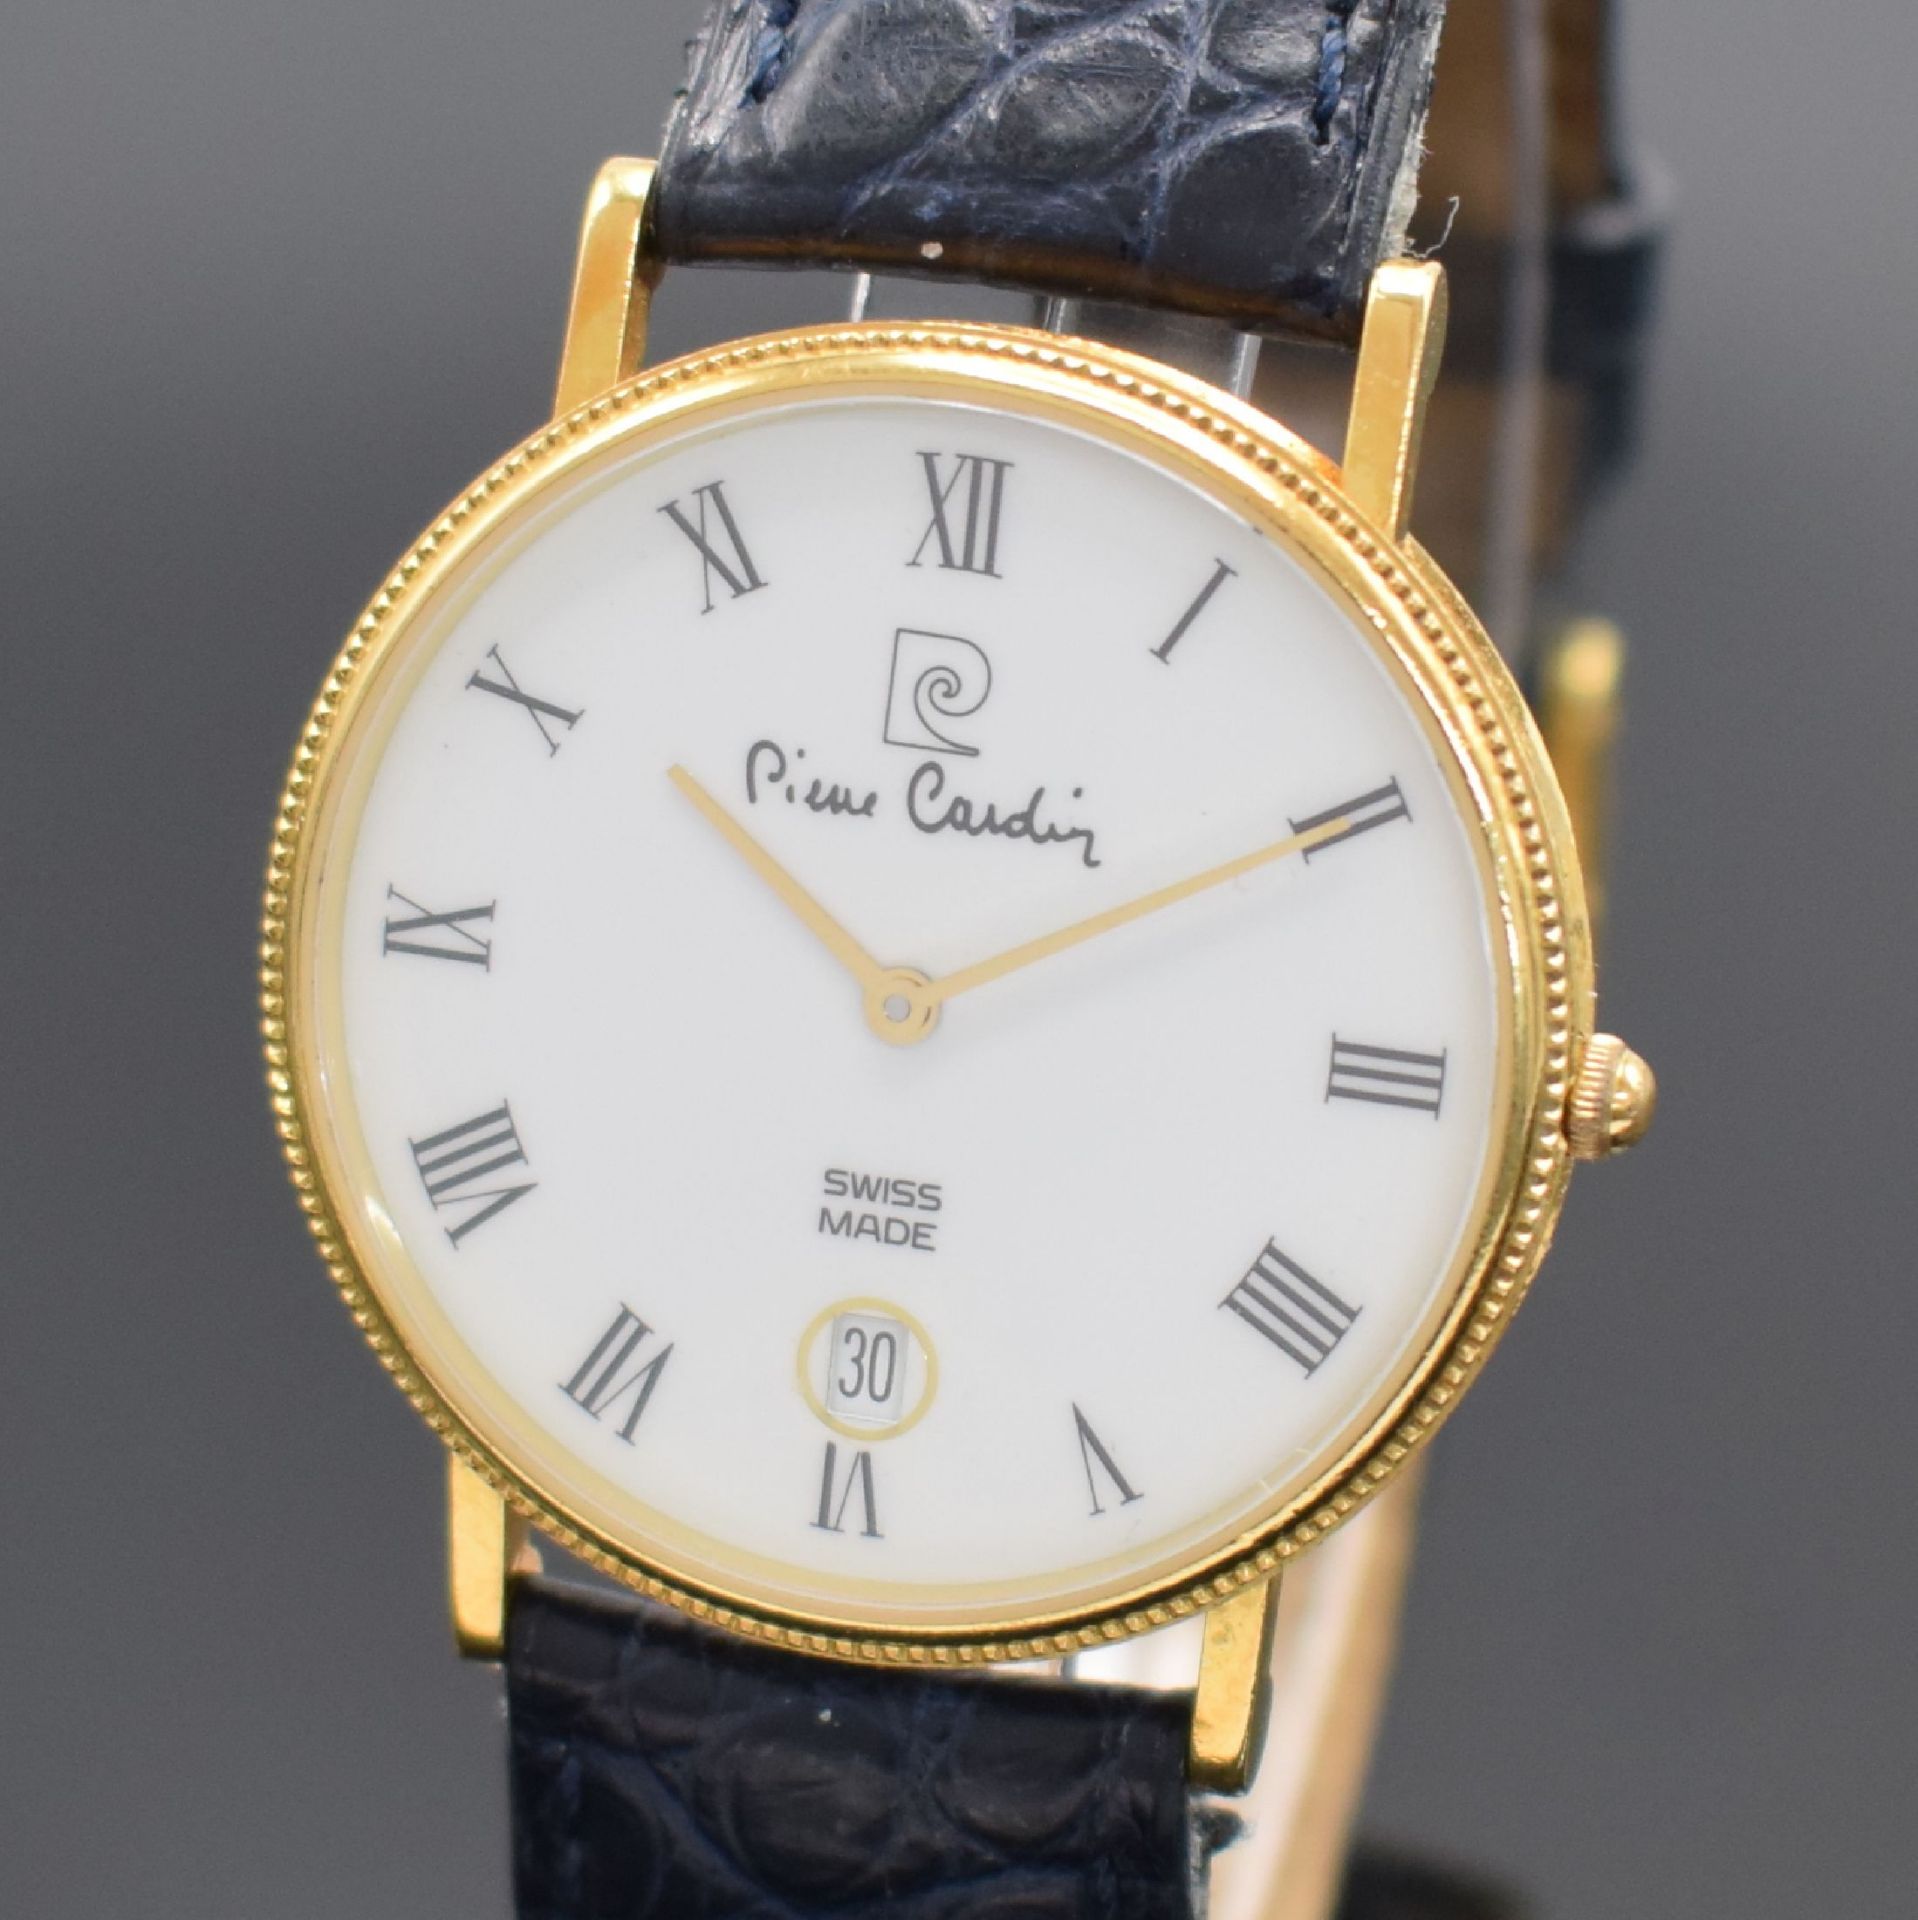 PIERRE CARDIN Armbanduhr in GG 750/000, Schweiz verk. lt. - Image 2 of 5